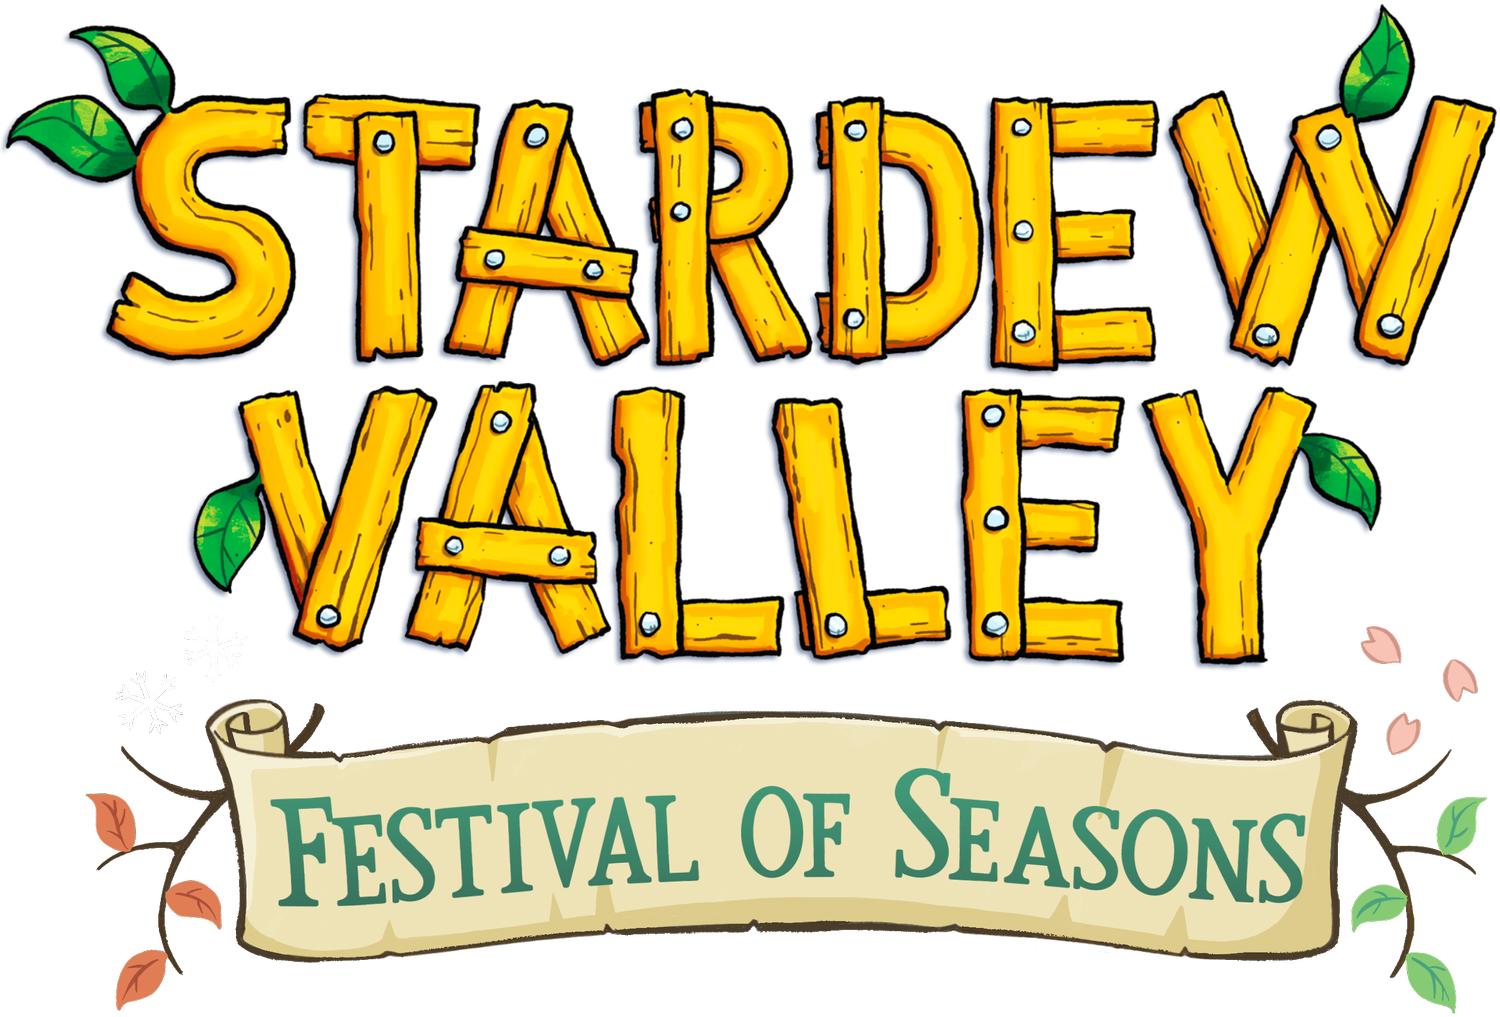 Stardew Valley: Festival of Seasons